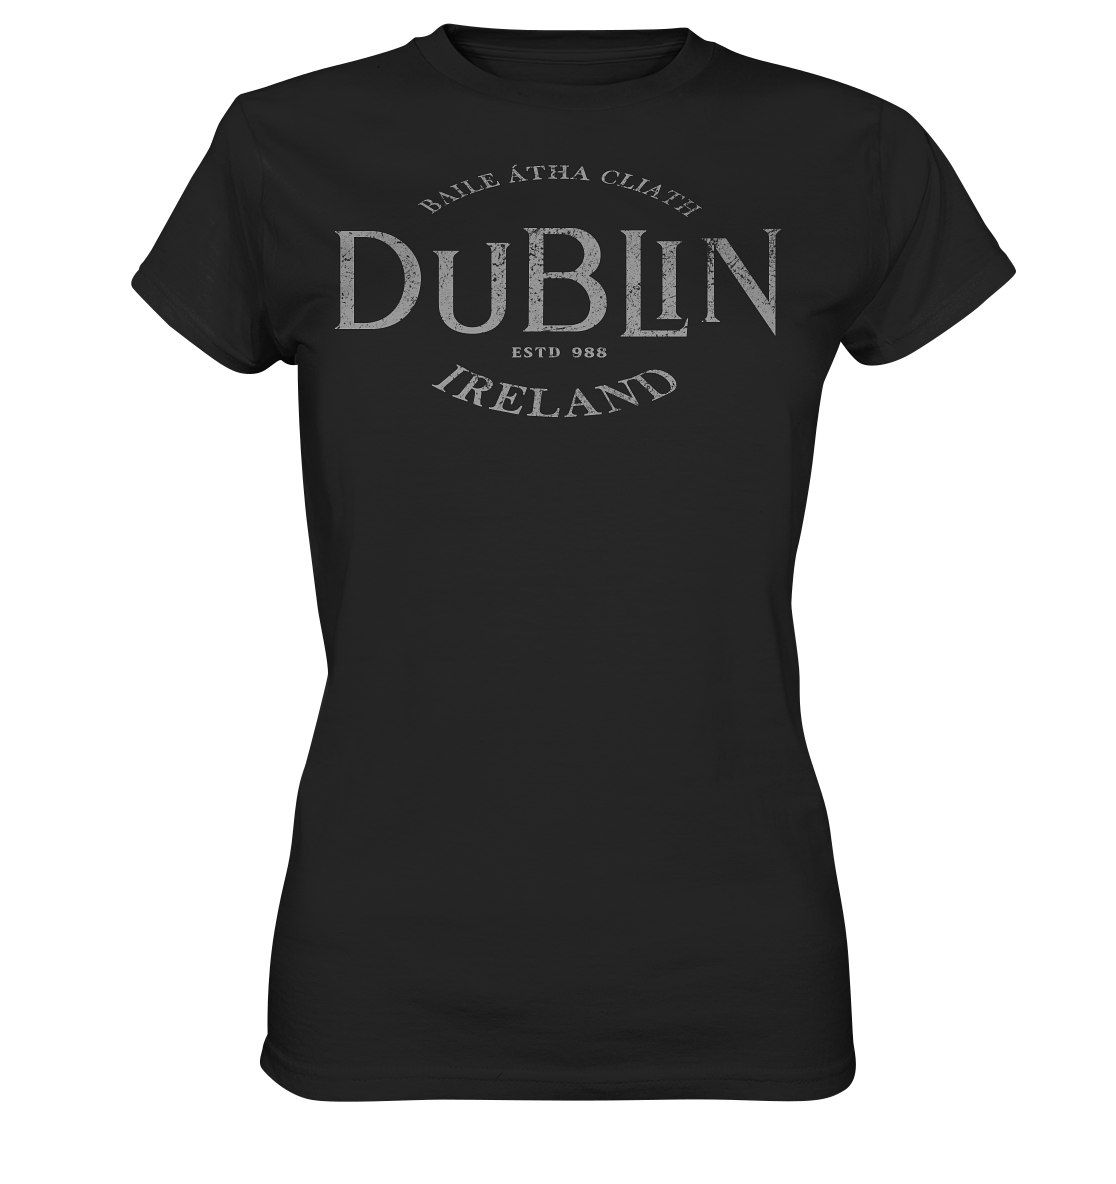 Dublin "Ireland / Baile Átha Cliath / Estd 988" - Ladies Premium Shirt